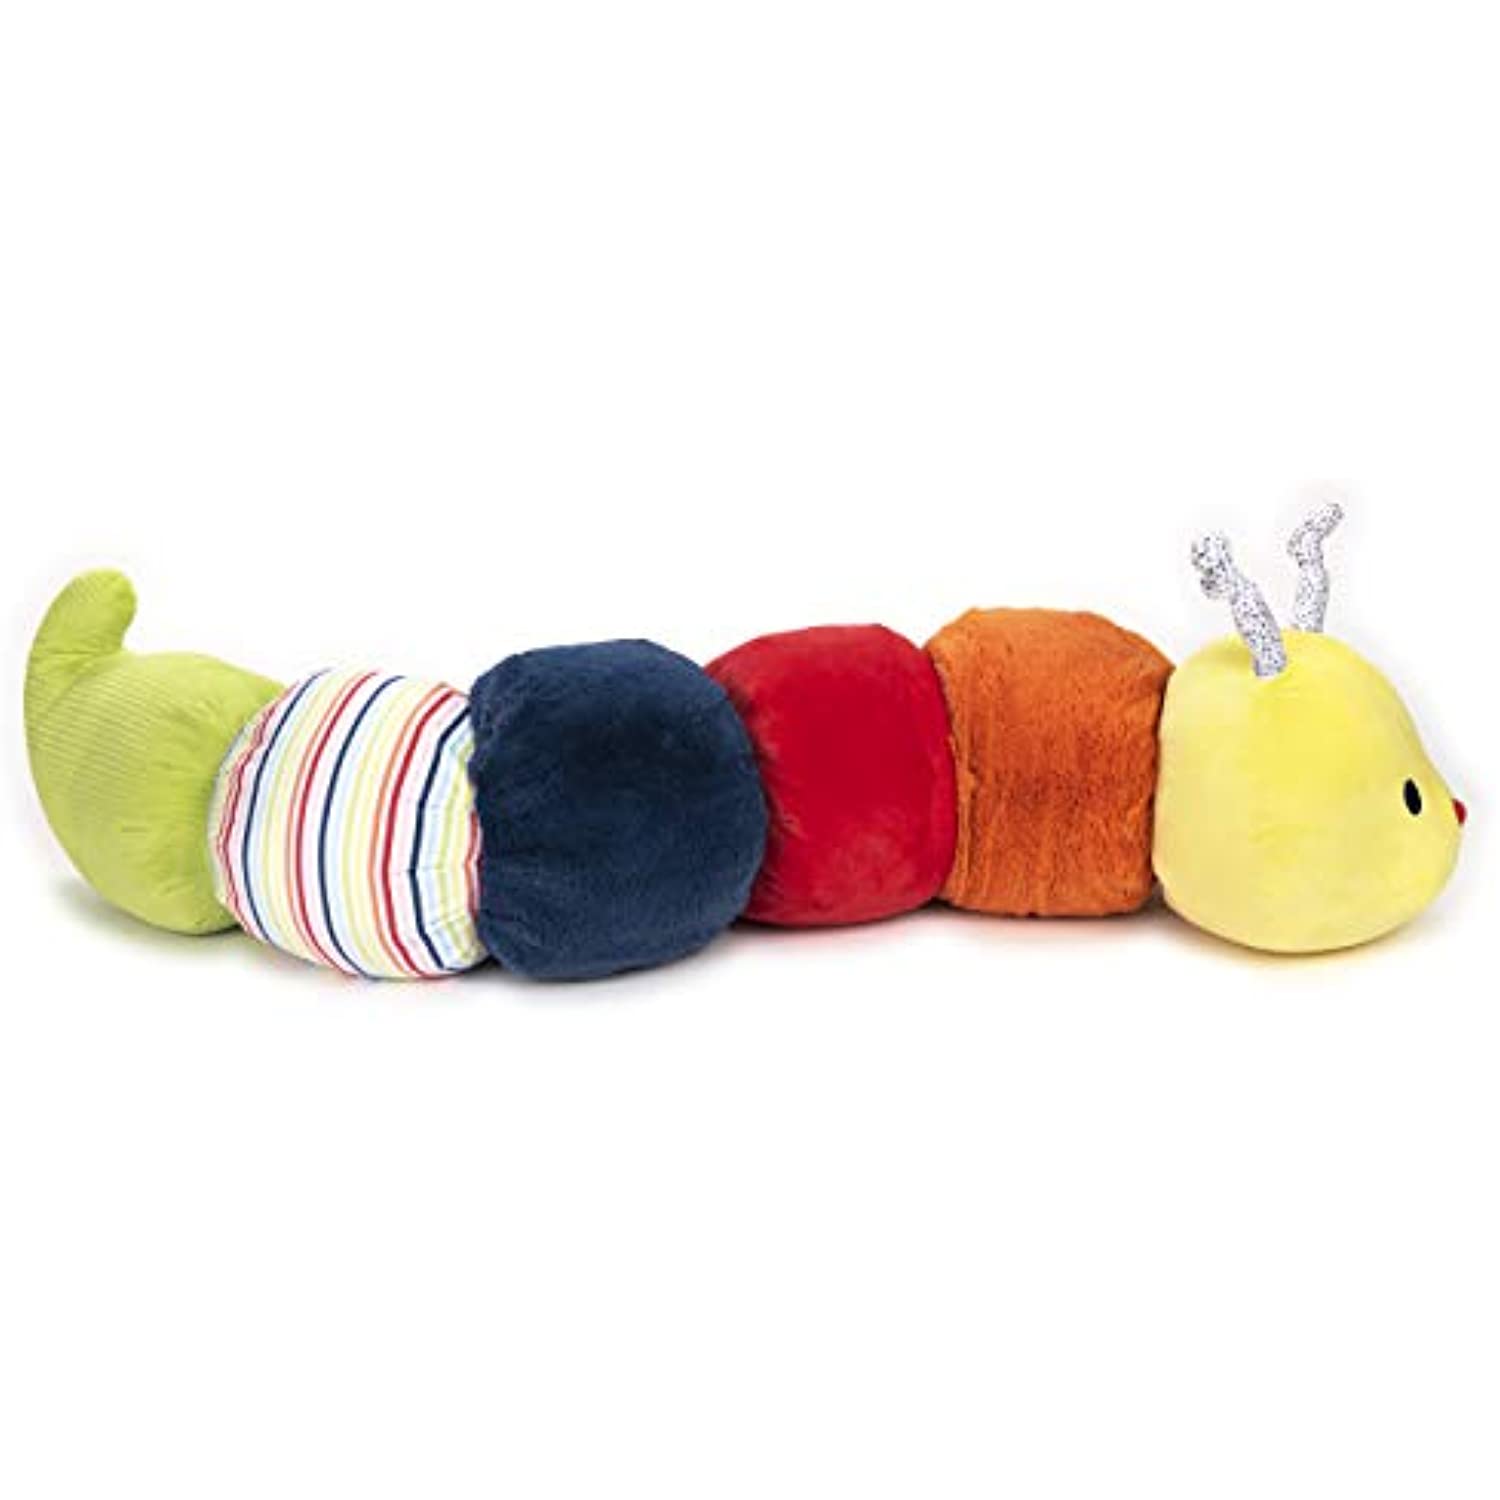 GUND Baby Tinkle Crinkle Jumbo Caterpillar Sensory Stimulating Plush Toy, 40"